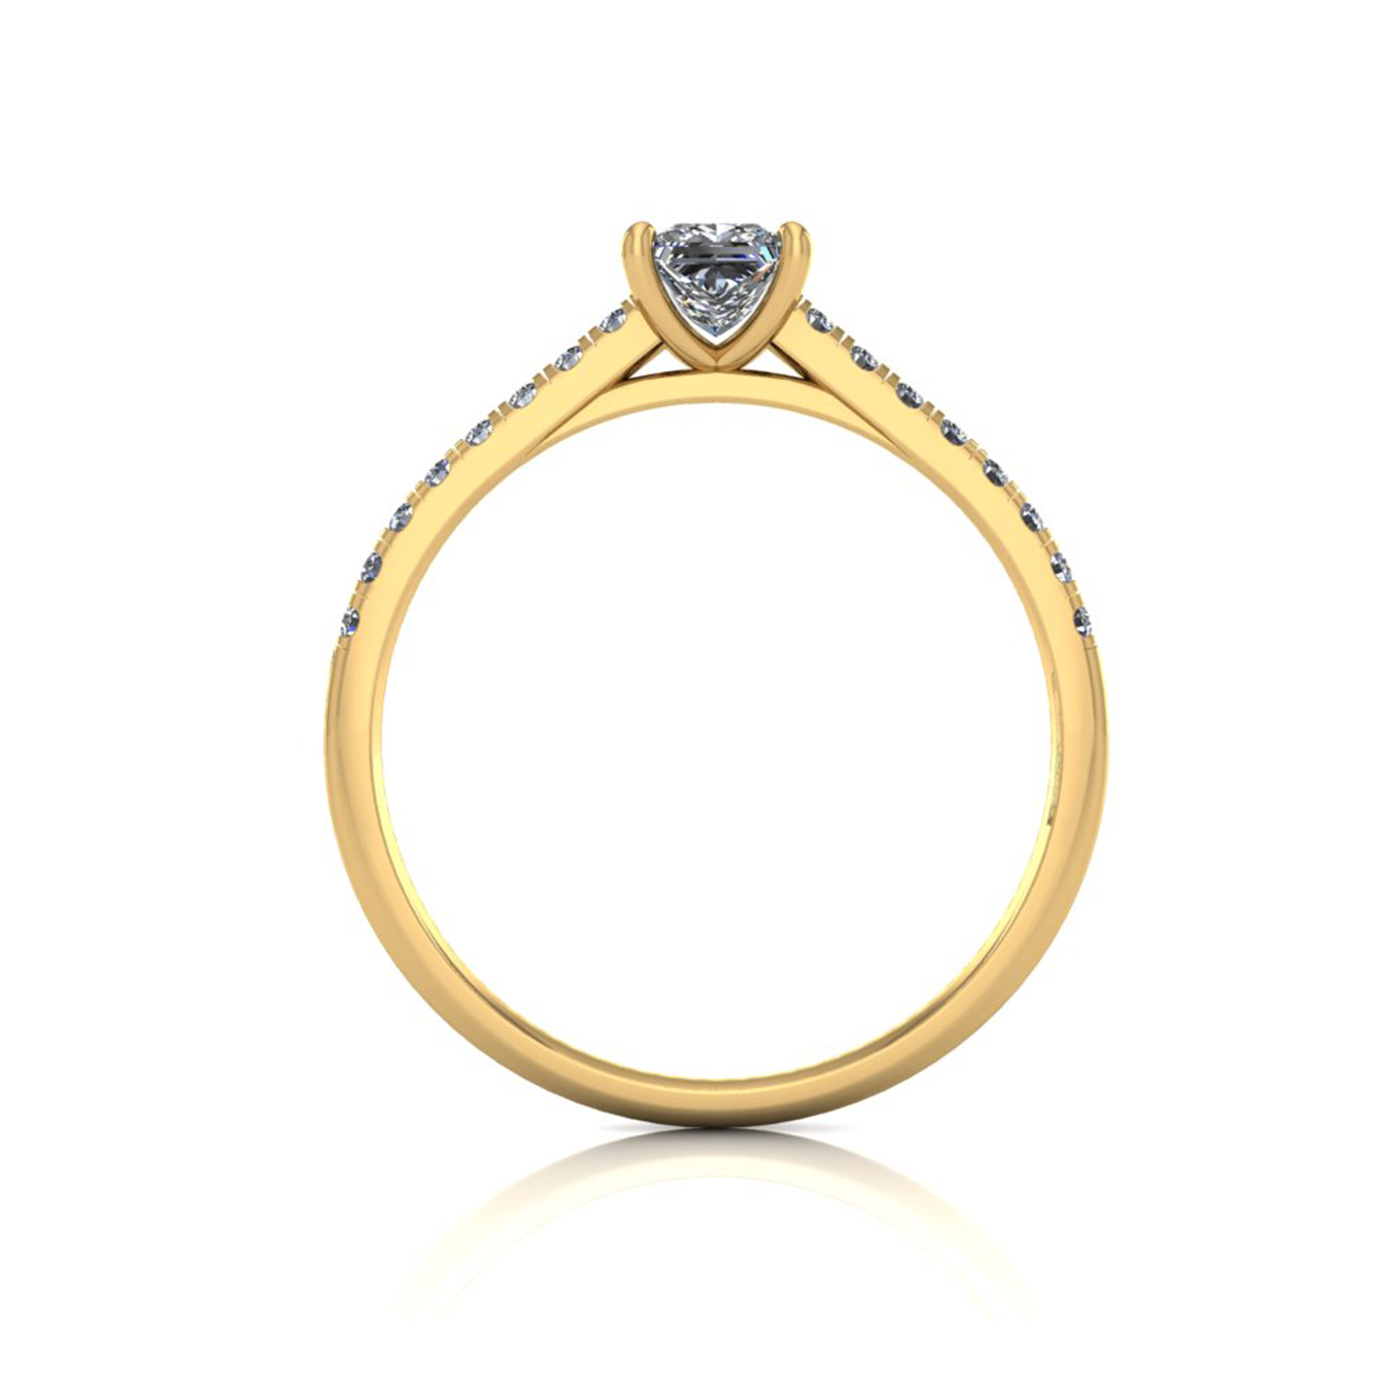 18k yellow gold  0,30 ct 4 prongs princess cut diamond engagement ring with whisper thin pavÉ set band